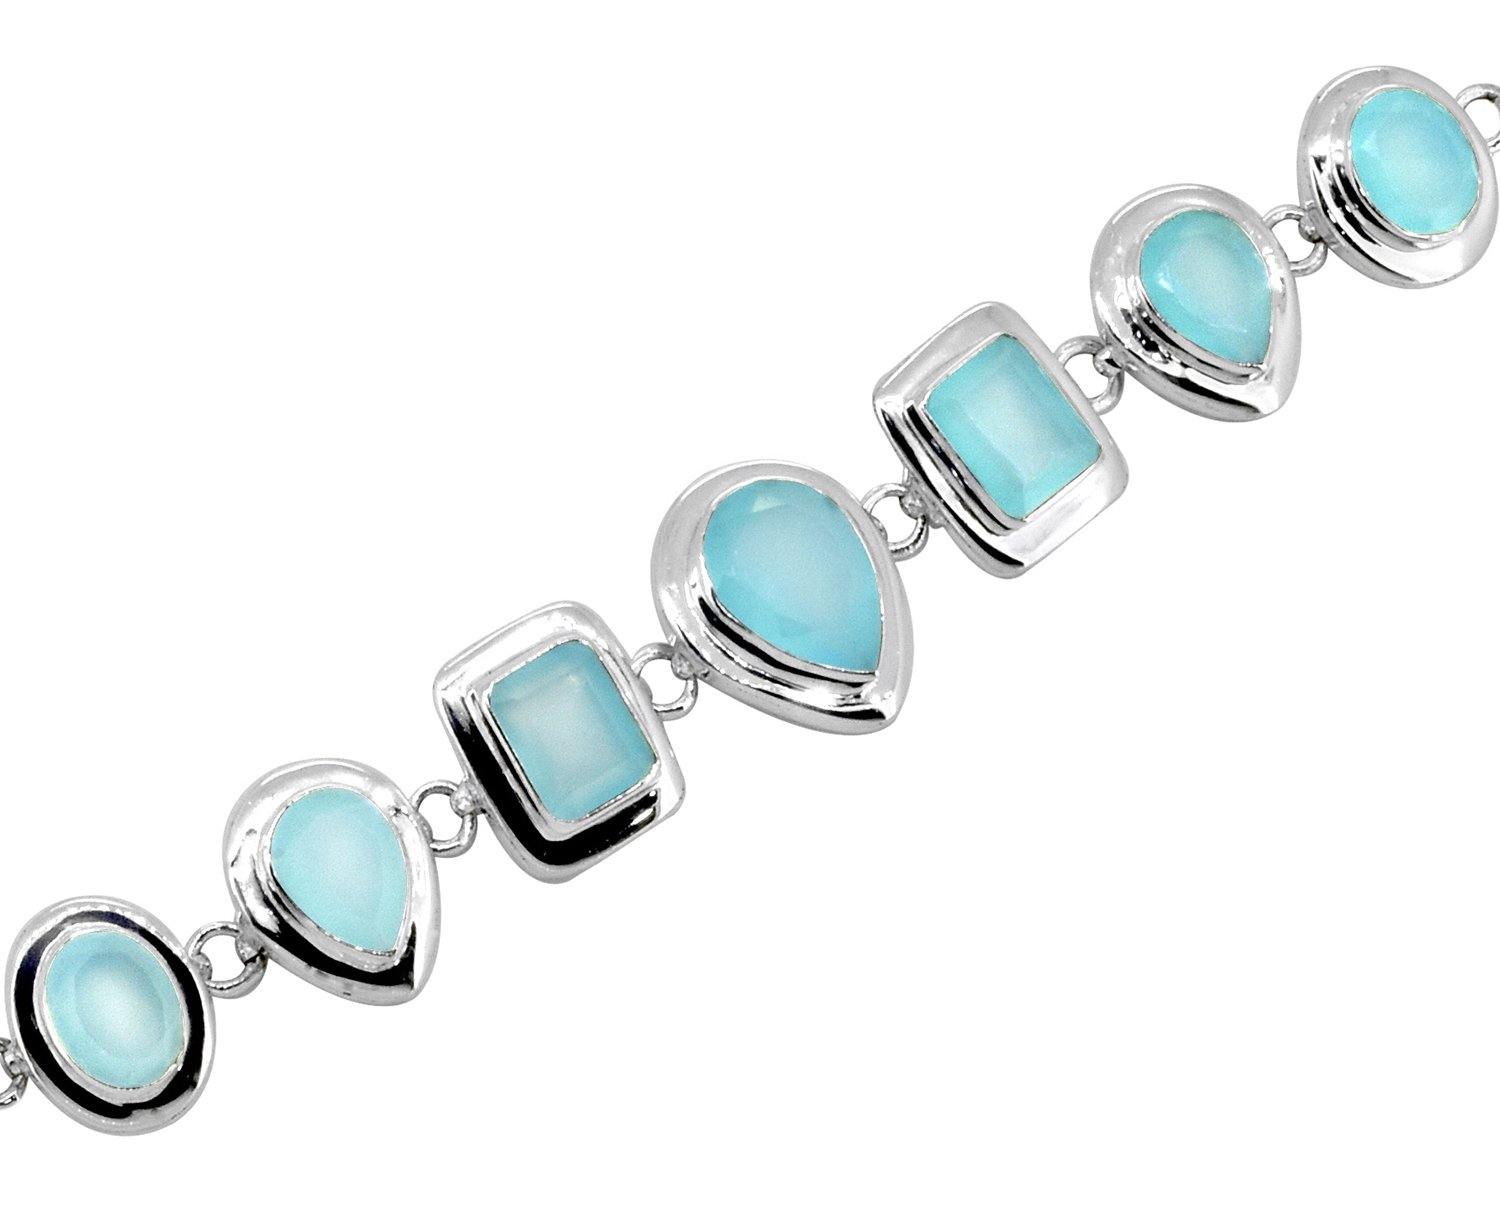 Aqua Chalcedony Solid 925 Sterling Silver Link Chain Bracelet Jewelry - YoTreasure